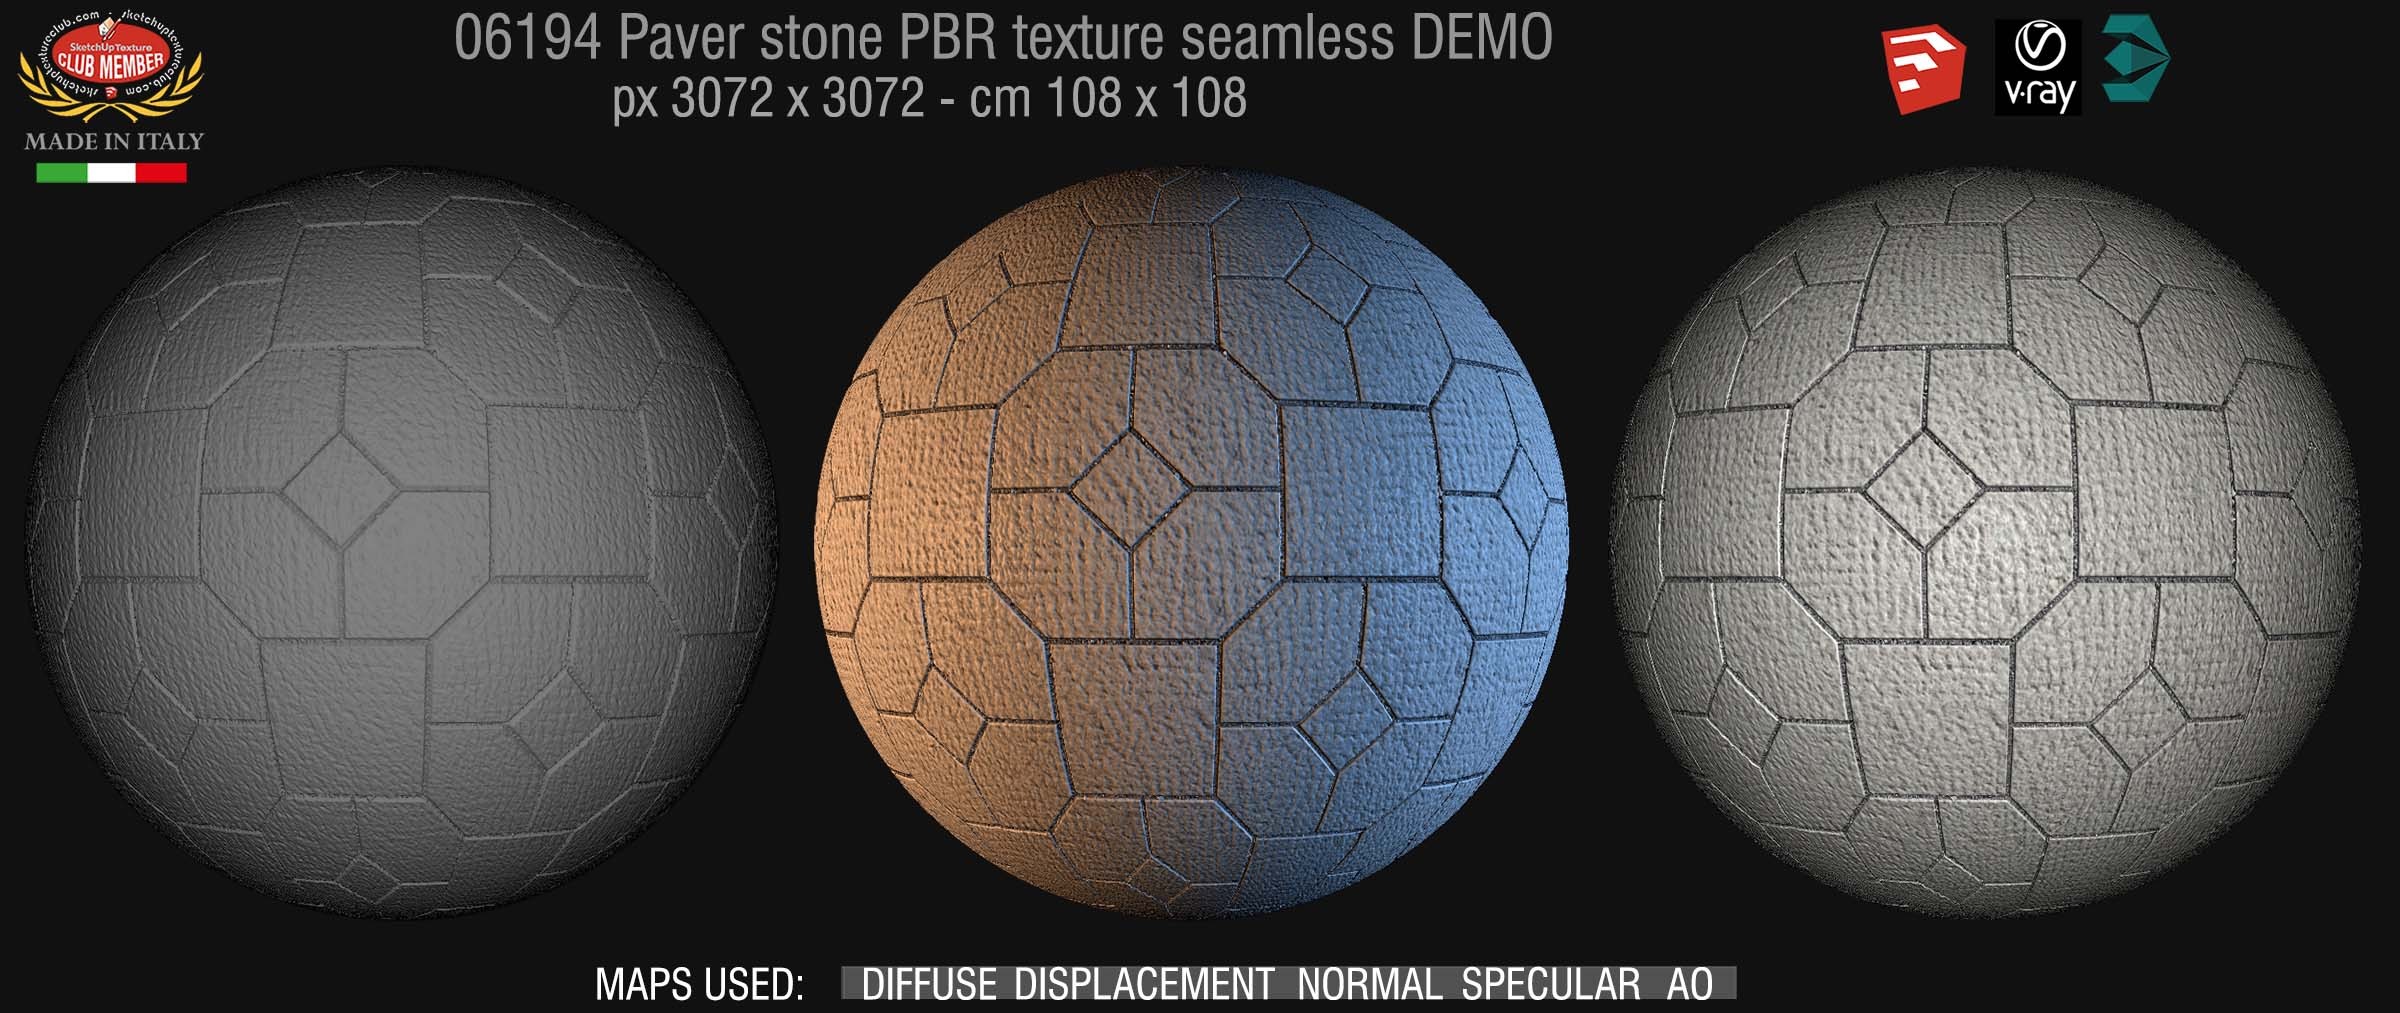 06194 Pavers stone PBR texture seamless DEMO